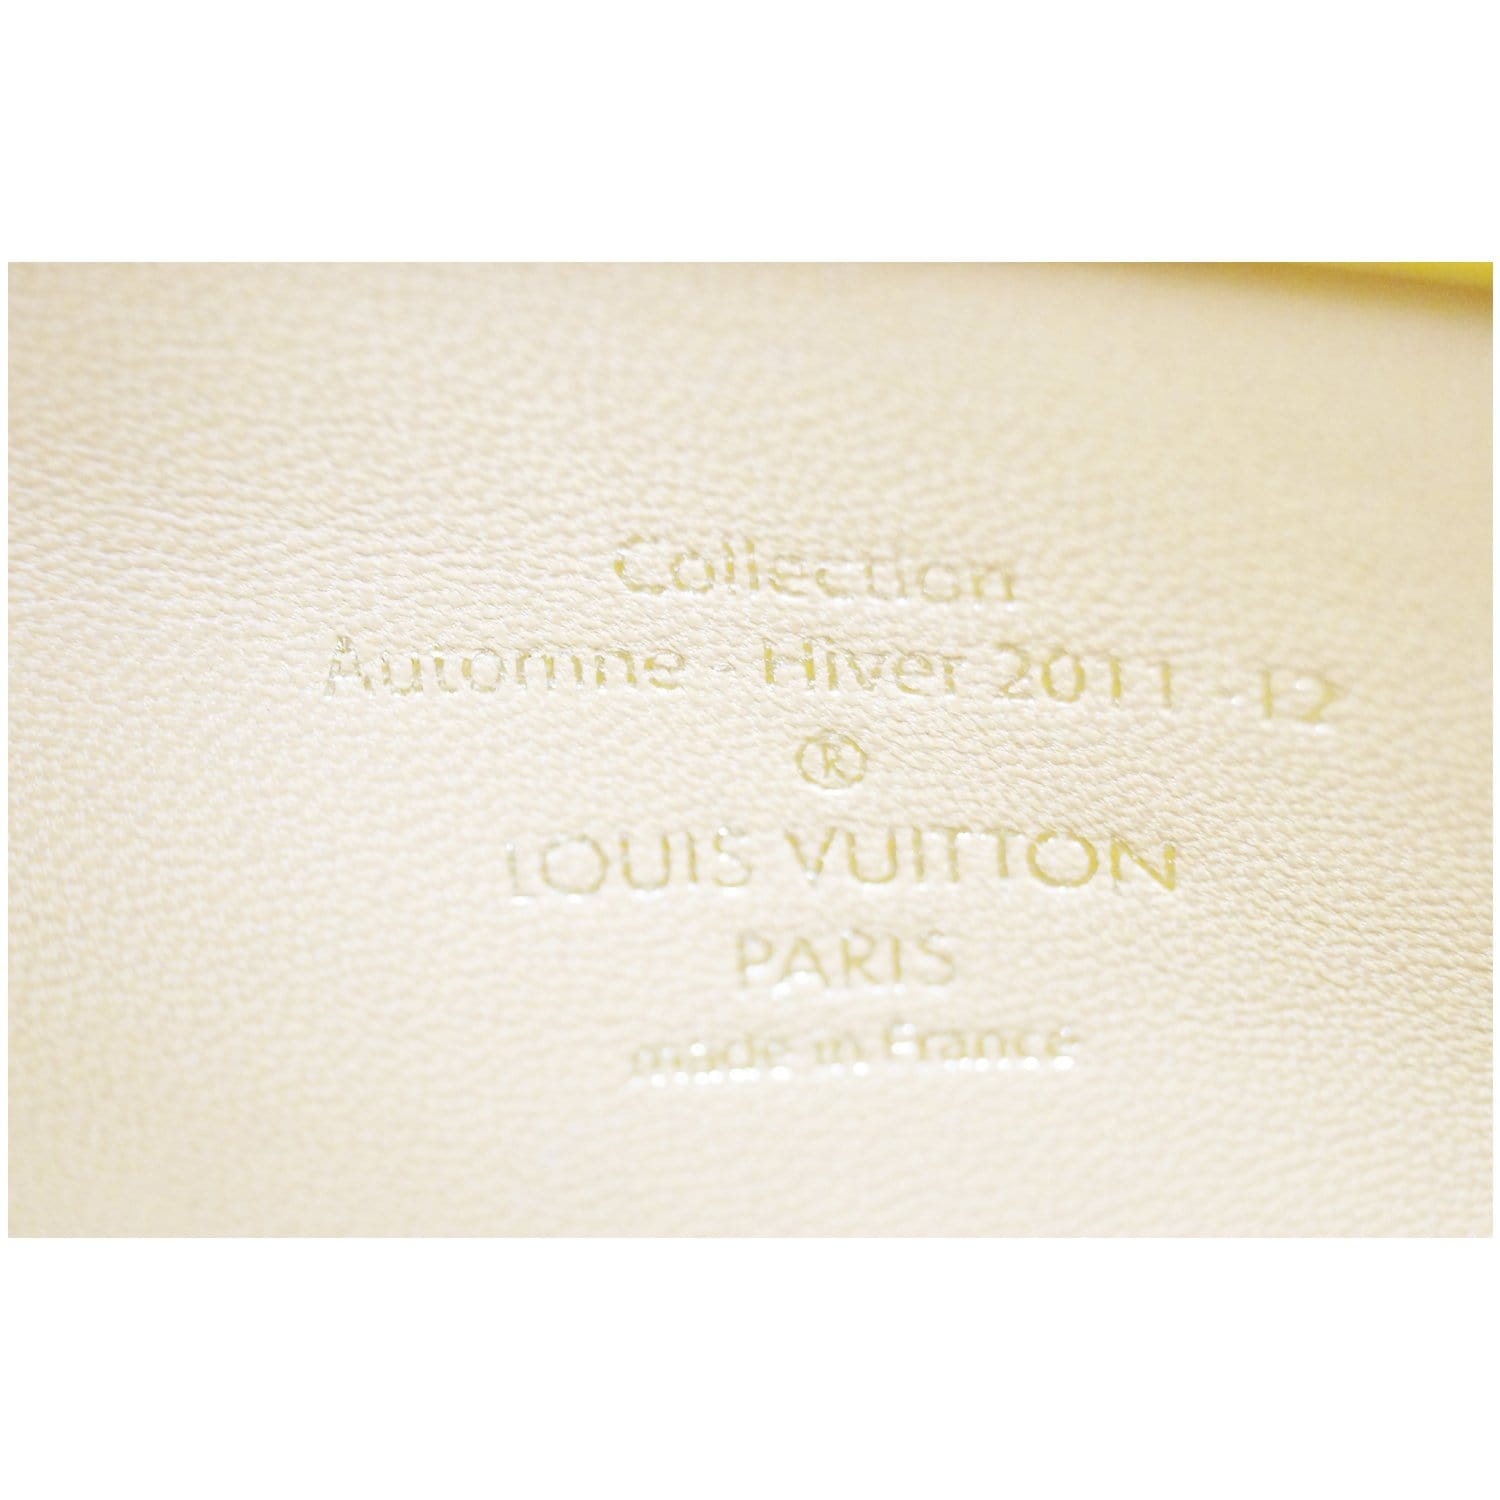 New Louis Vuitton Lockit Handbag, Collection Automne - Hiver: 2011